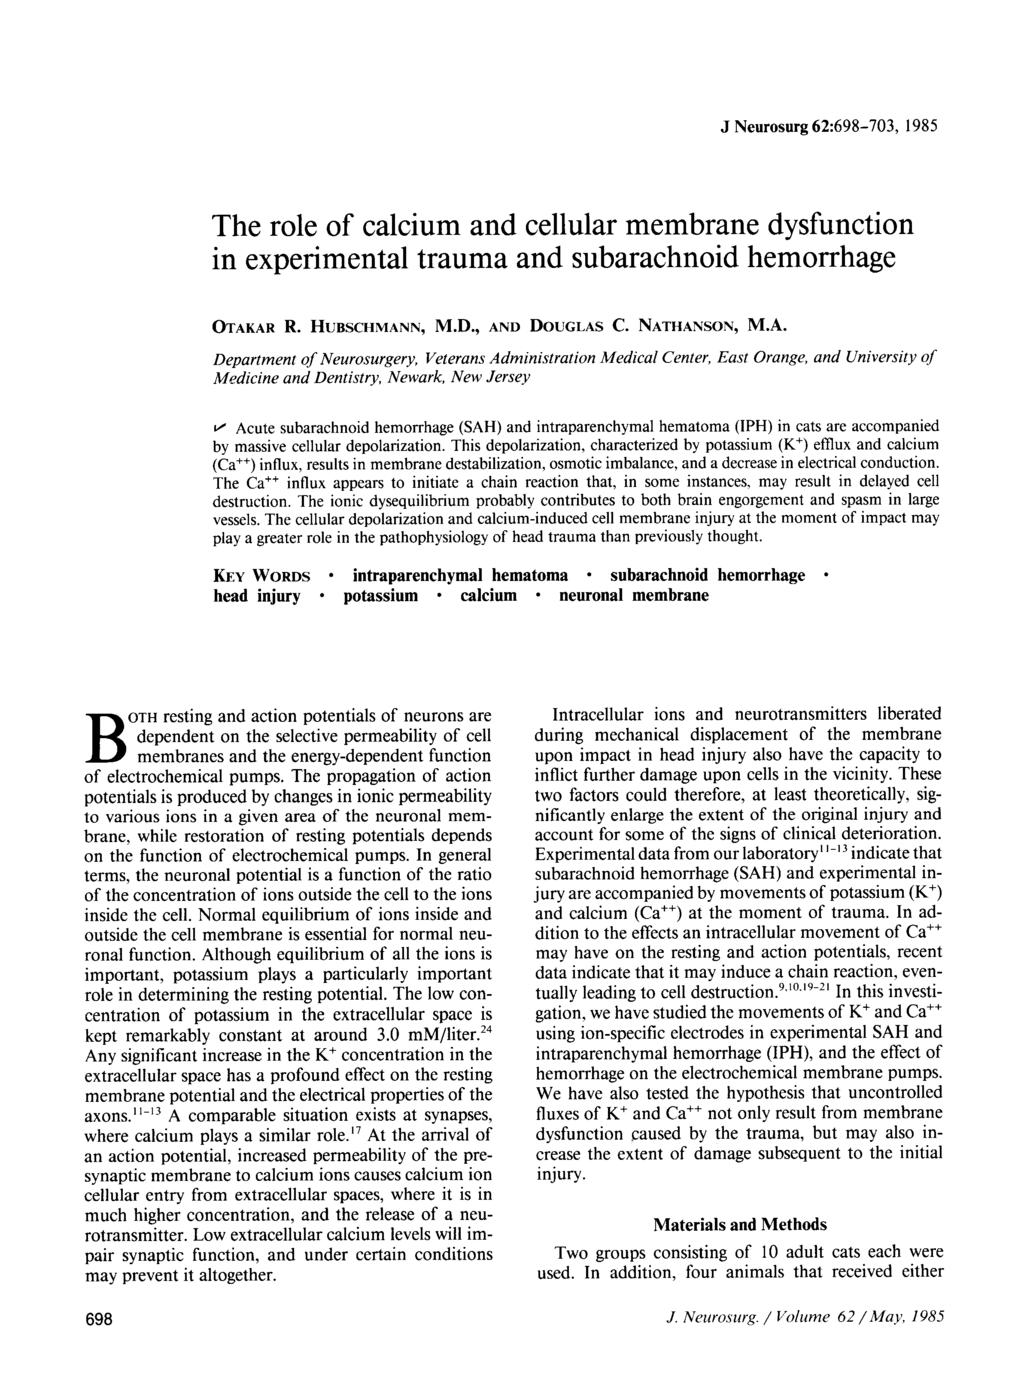 J Neurosurg 62:698-703, 1985 The role of calcium and cellular membrane dysfunction in experimental trauma and subarachnoid hemorrhage OTAK